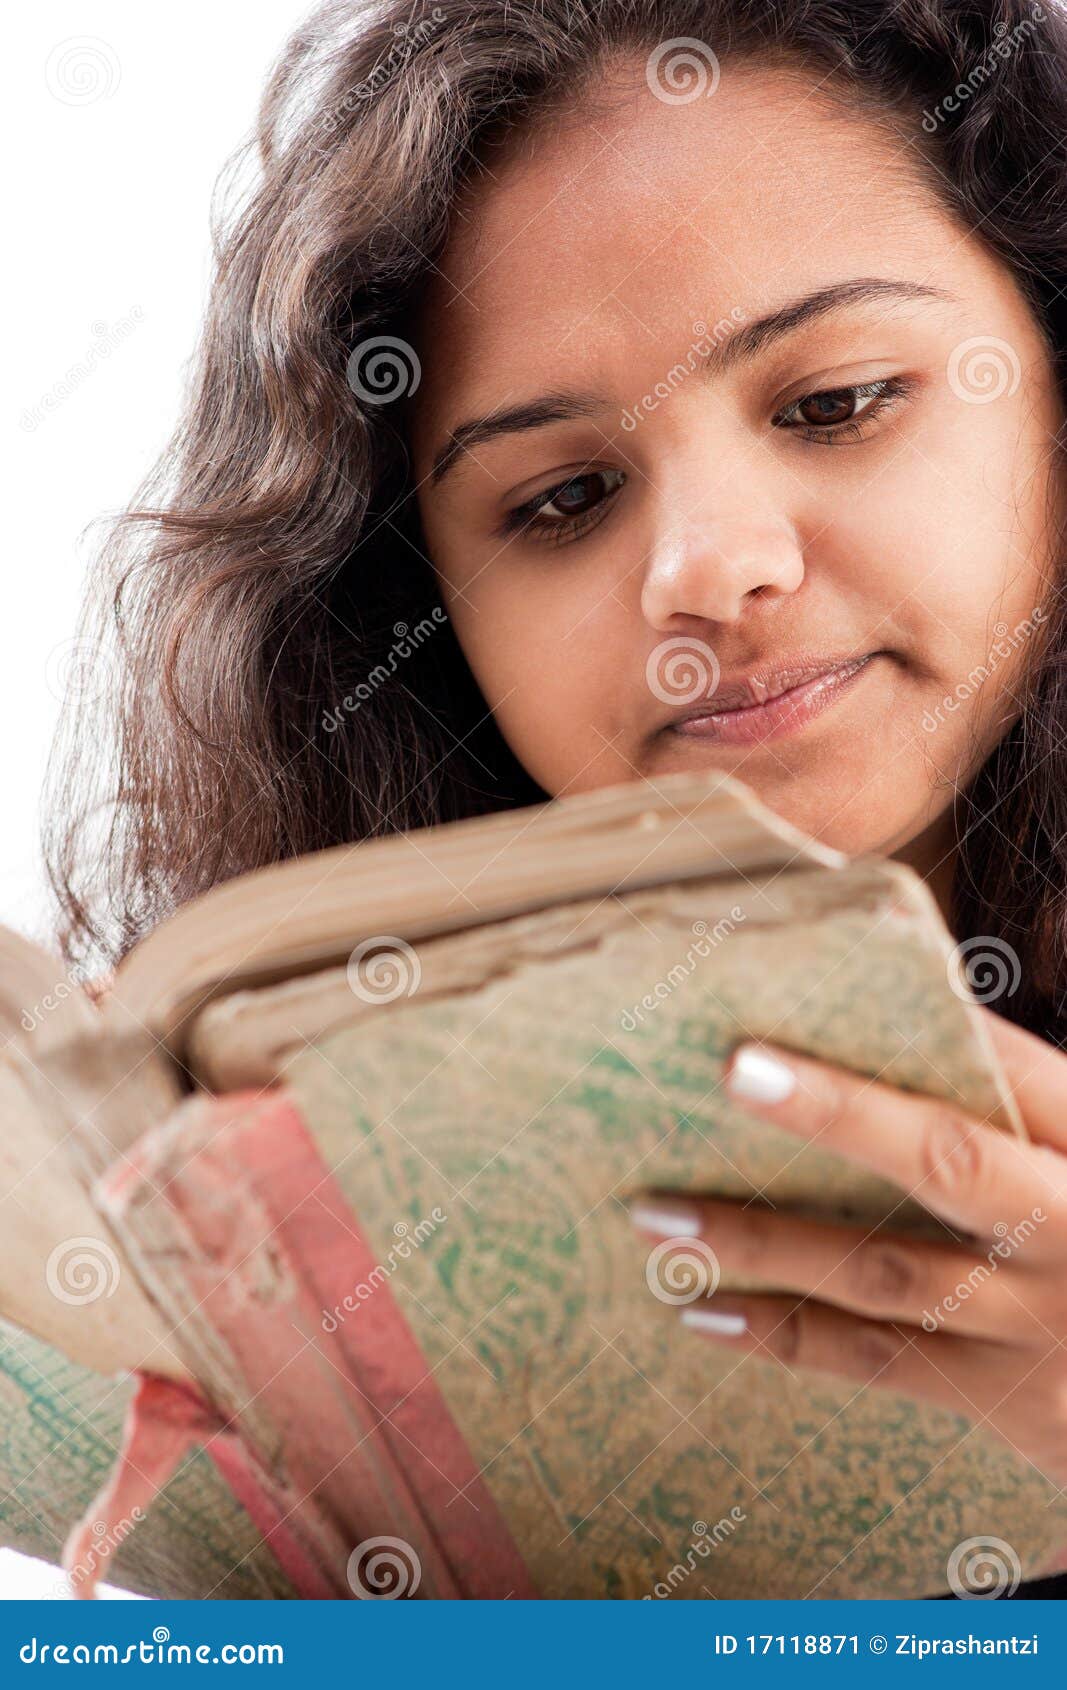 Indian girl reading book stock image. Image of damaged - 17118871